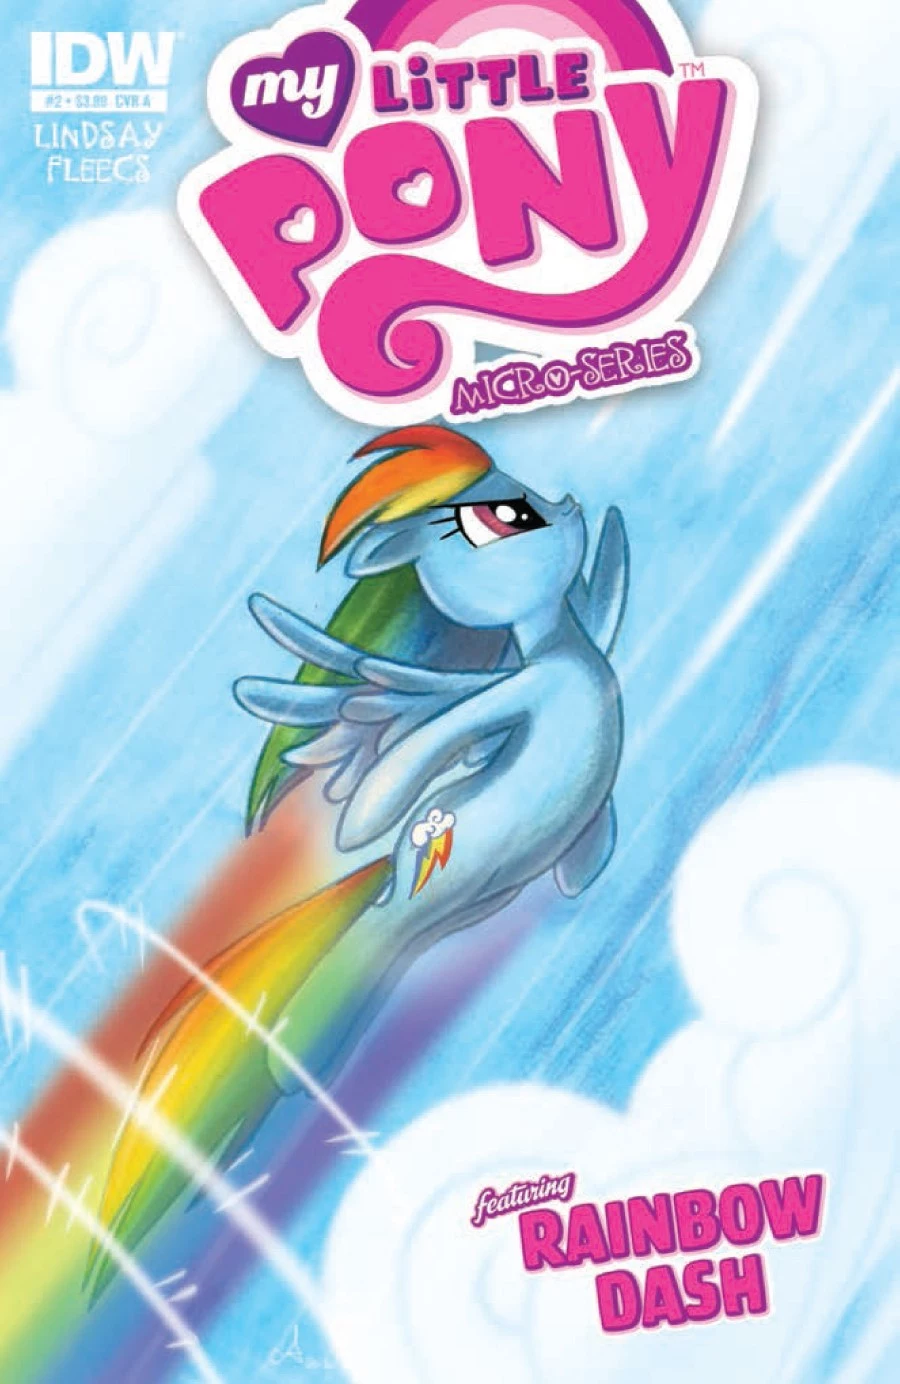 'my little pony microseries 2 rainbow dash' brings the